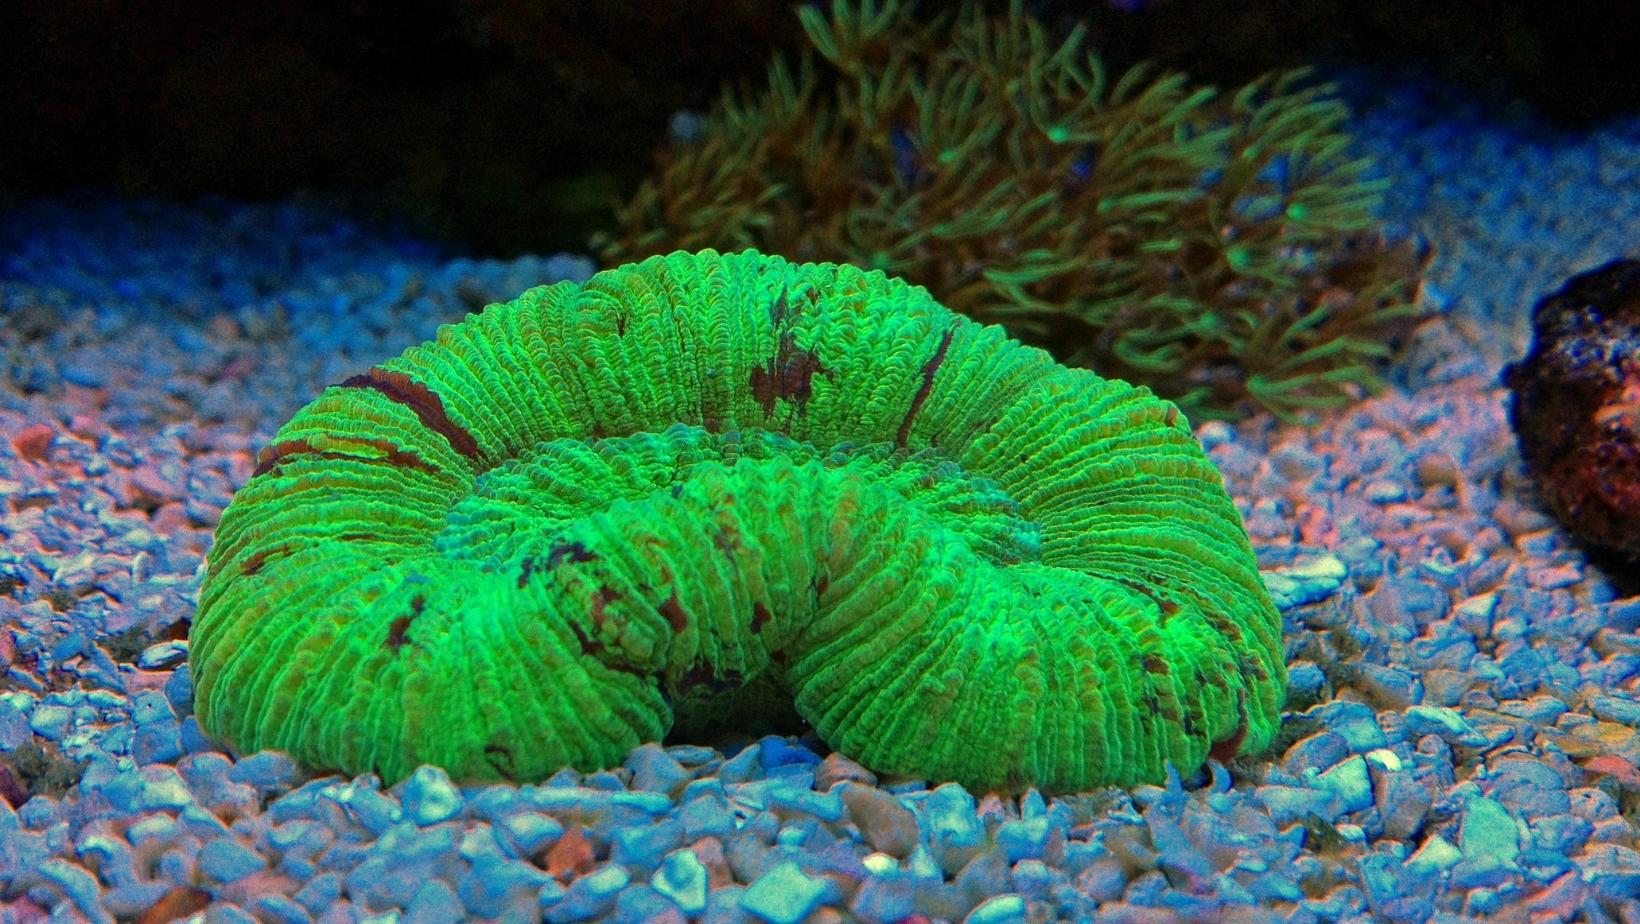 Cool underwater plants